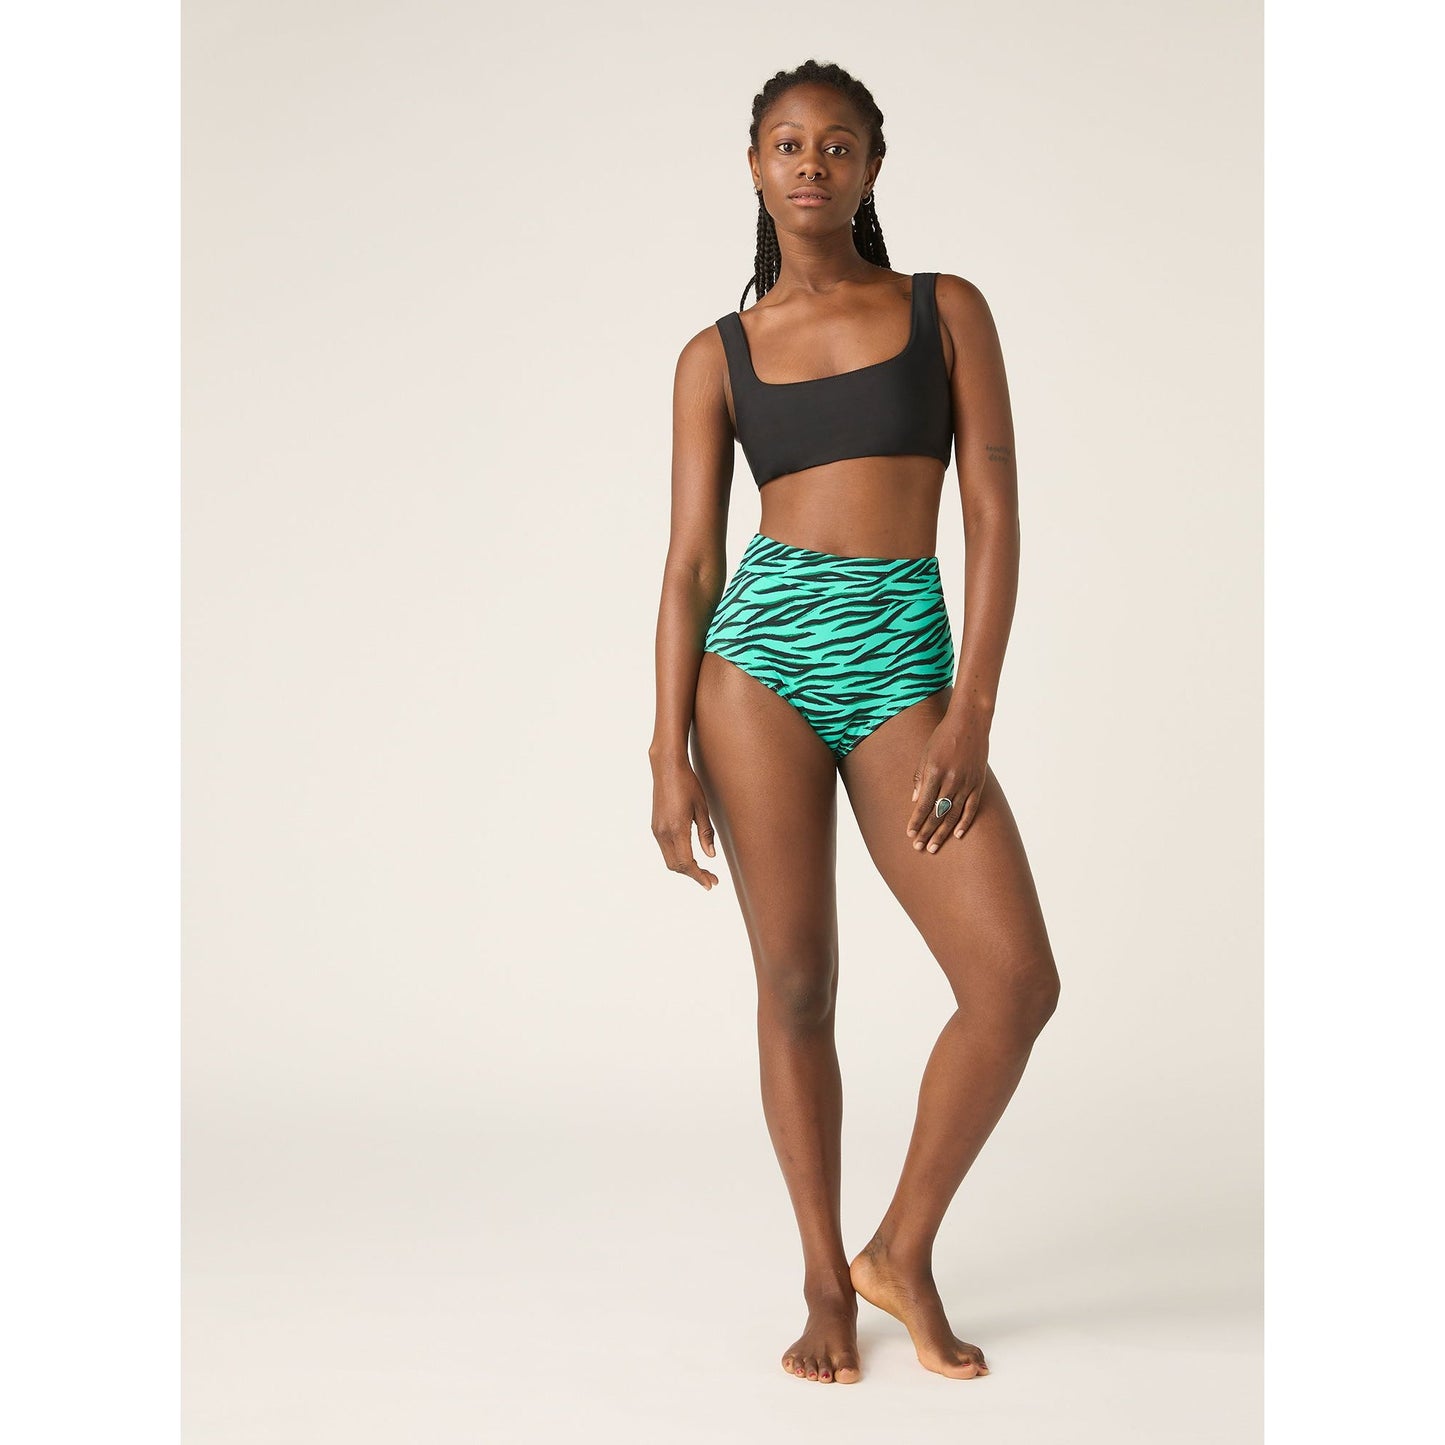 Modibodi® Period Swimwear Bikini Brief - Hi Waist